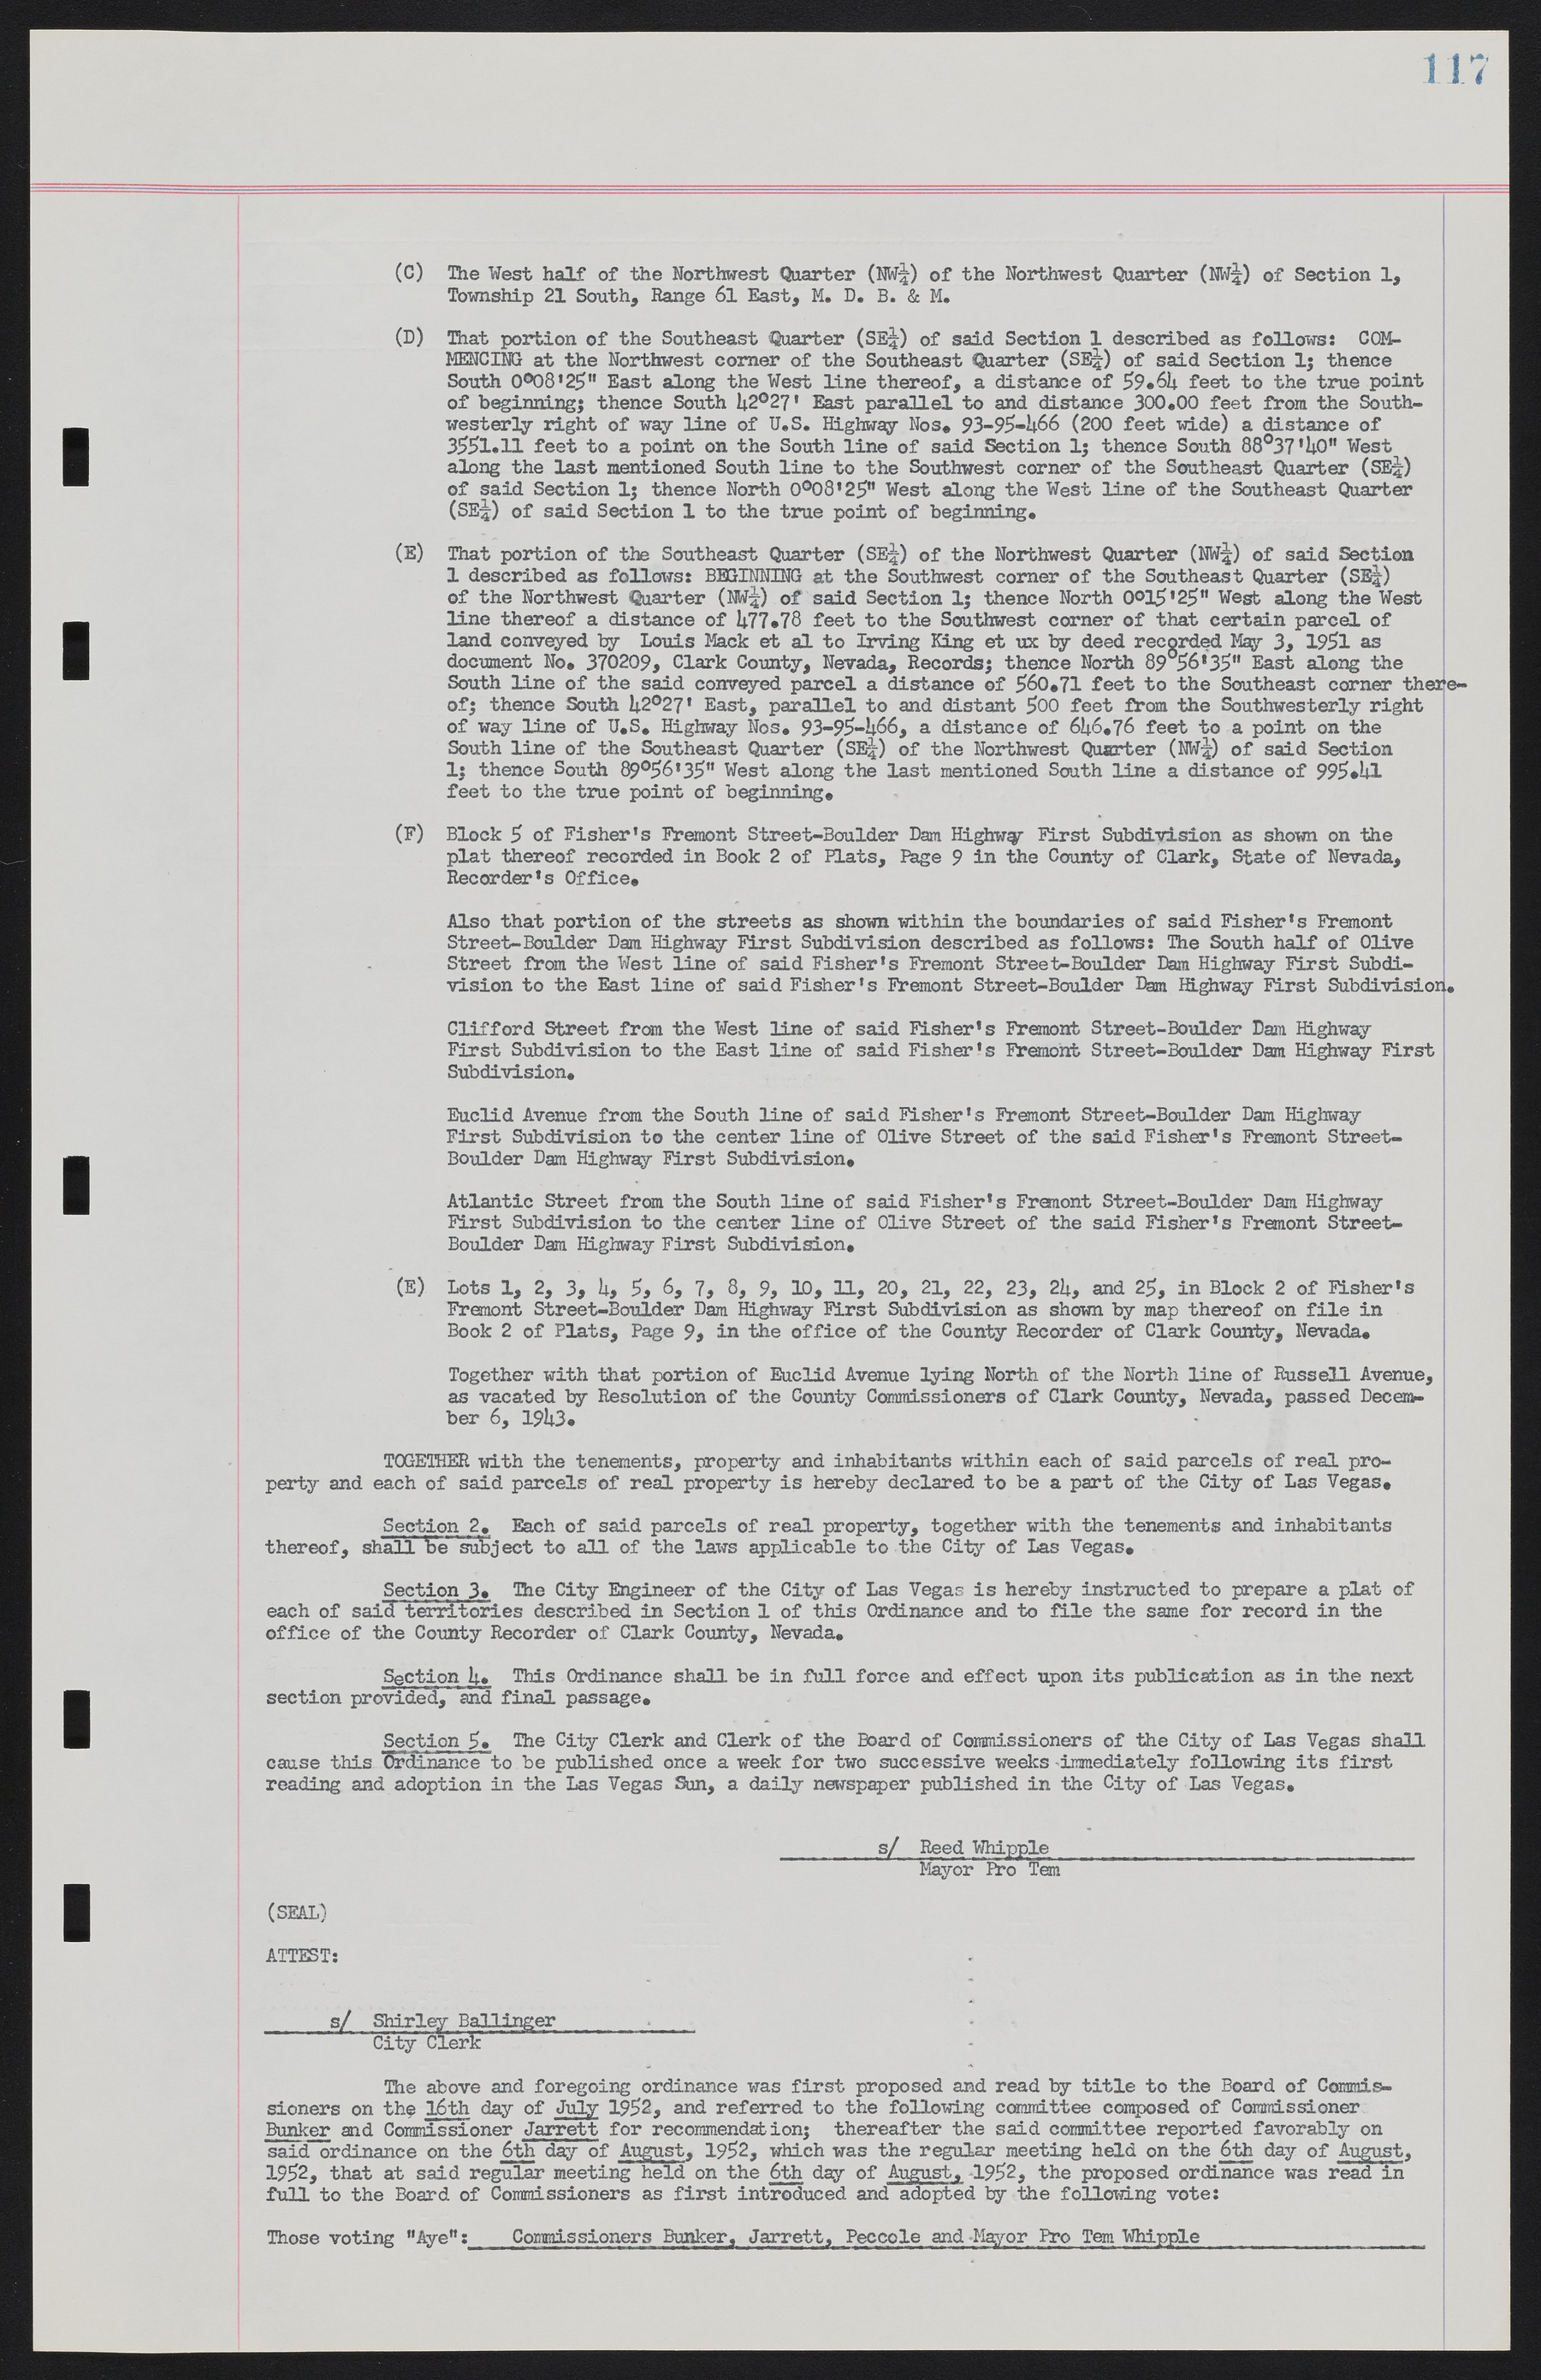 Las Vegas City Ordinances, November 13, 1950 to August 6, 1958, lvc000015-125